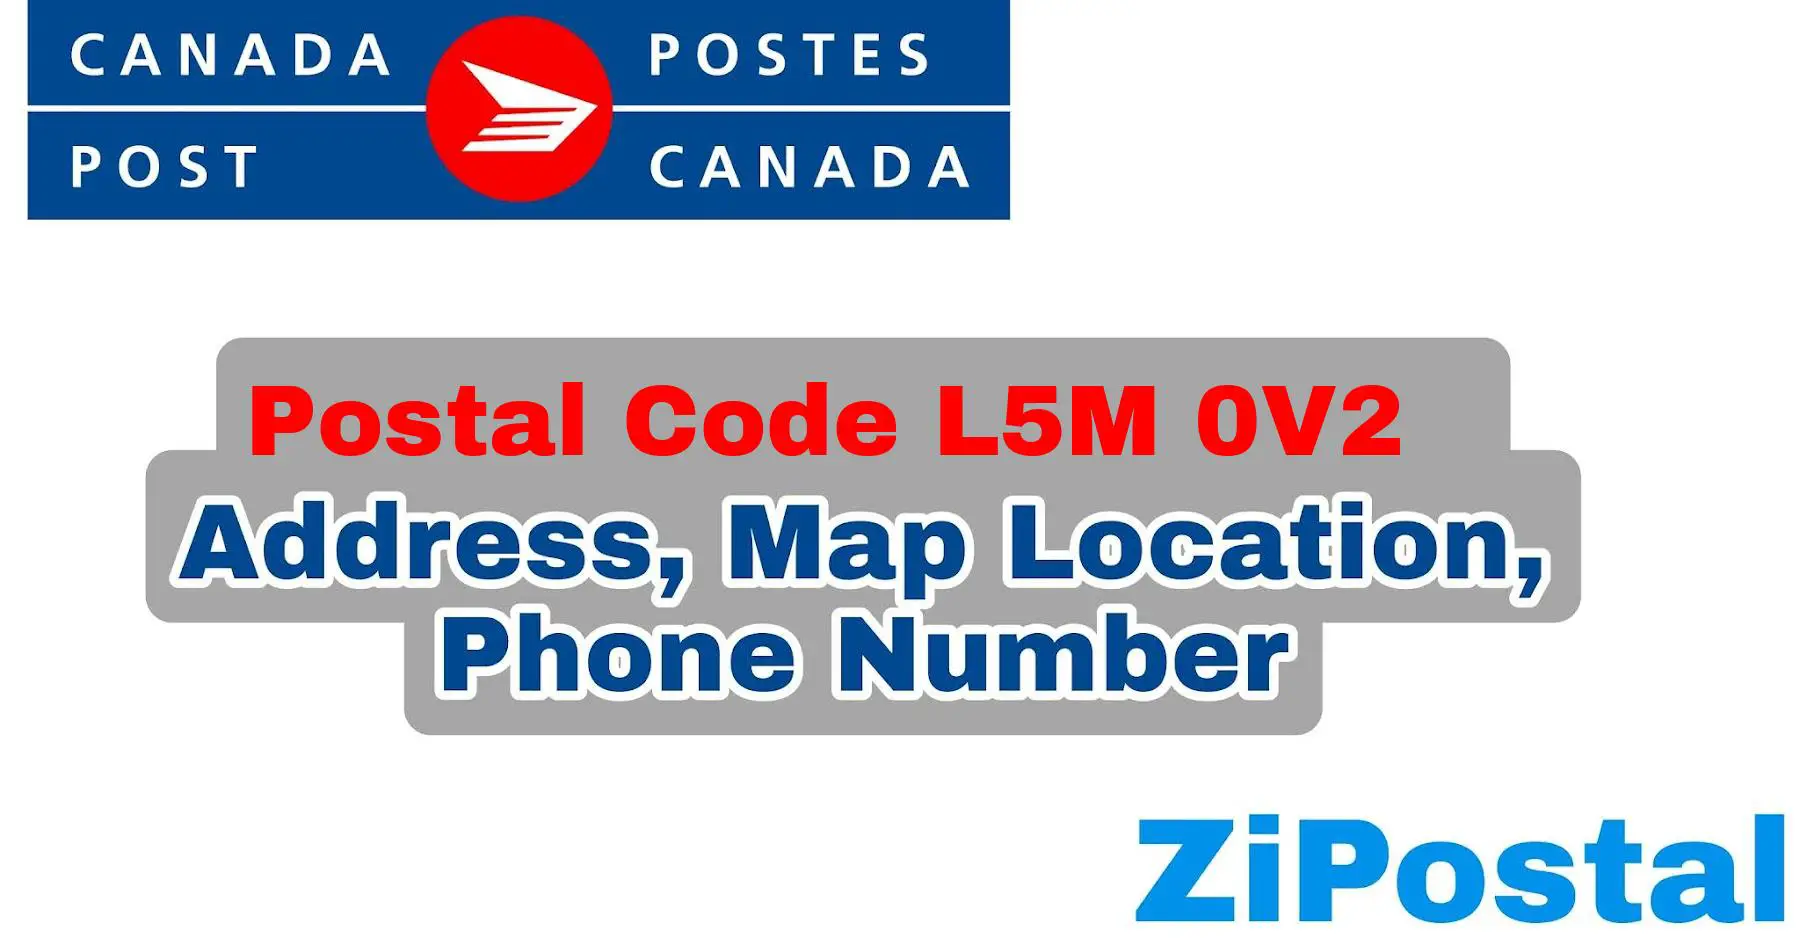 Postal Code L5M 0V2 Address Map Location and Phone Number